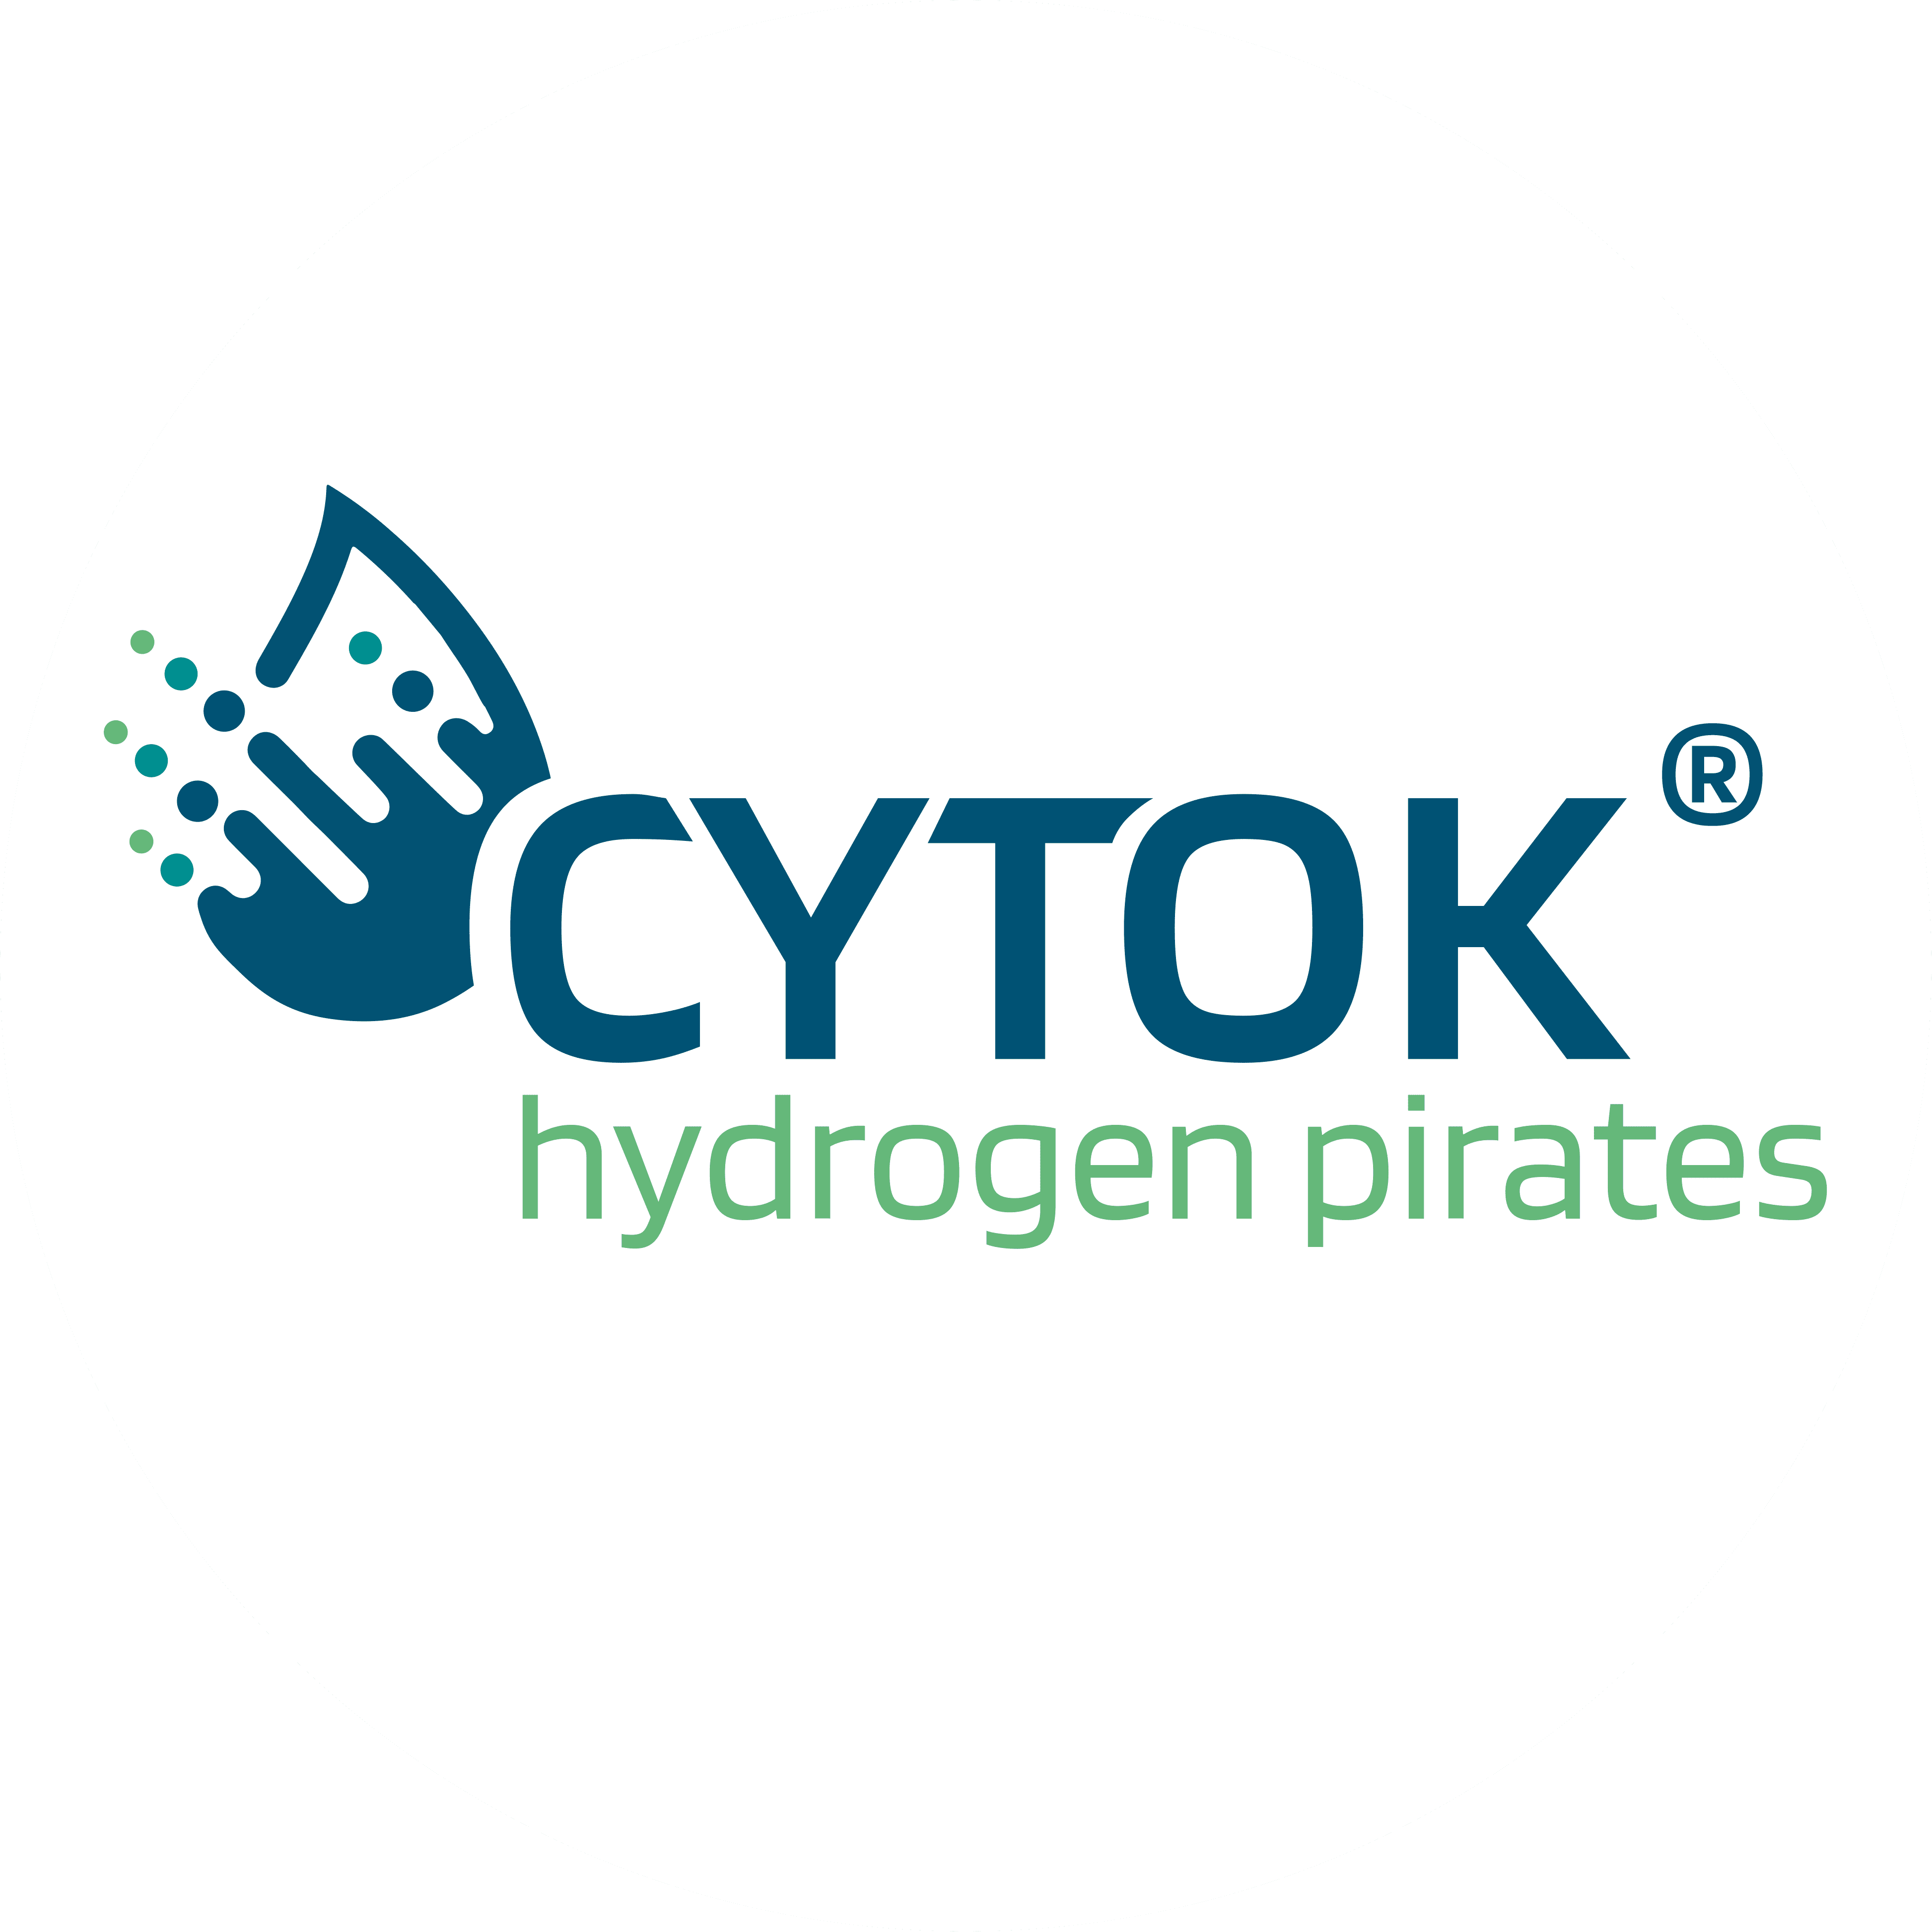 Cytok® - hydrogen pirates